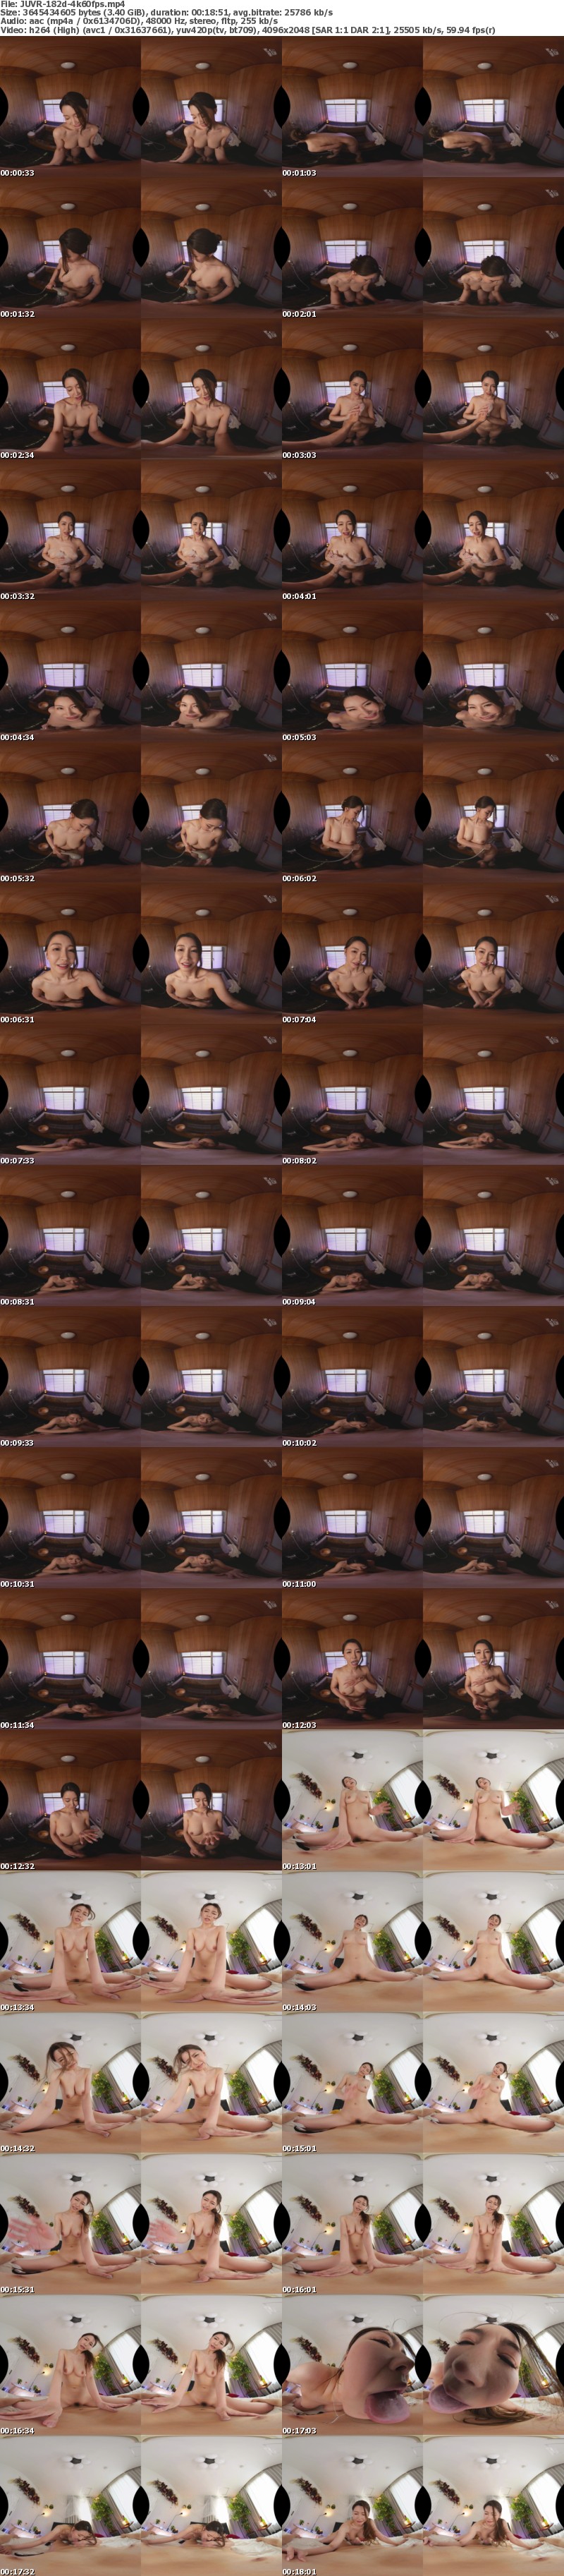 [VR] JUVR-182 【VR】超高画質8KVR 『あーあ、もう帰れなくなっちゃったね』確信犯的にホテルへ連れ込み僕を●す女上司 新卒の僕は一歩も動けずに朝まで中出しさせられ続けてしまった。 愛弓りょう